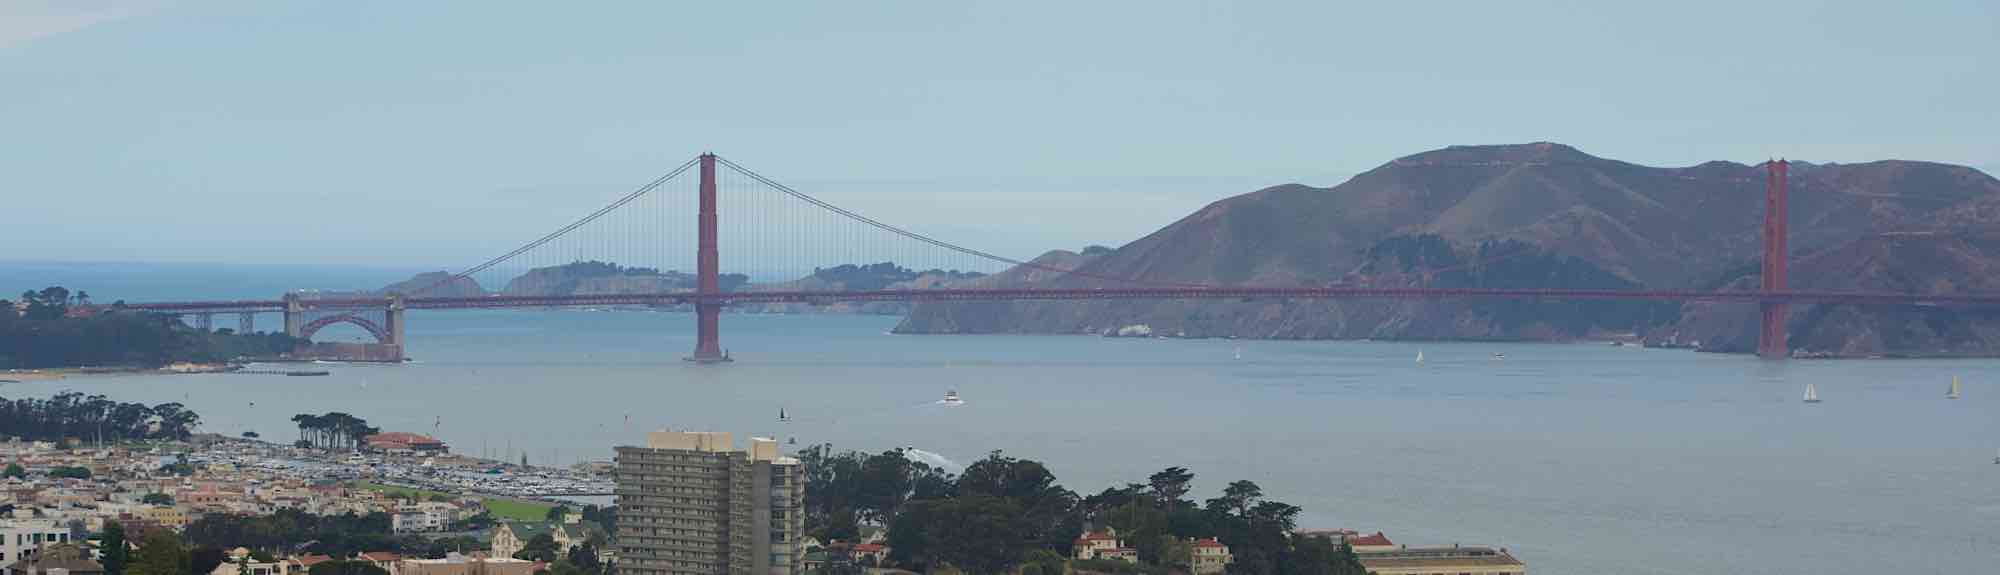 Golden Gate Bridge from Colt Tower